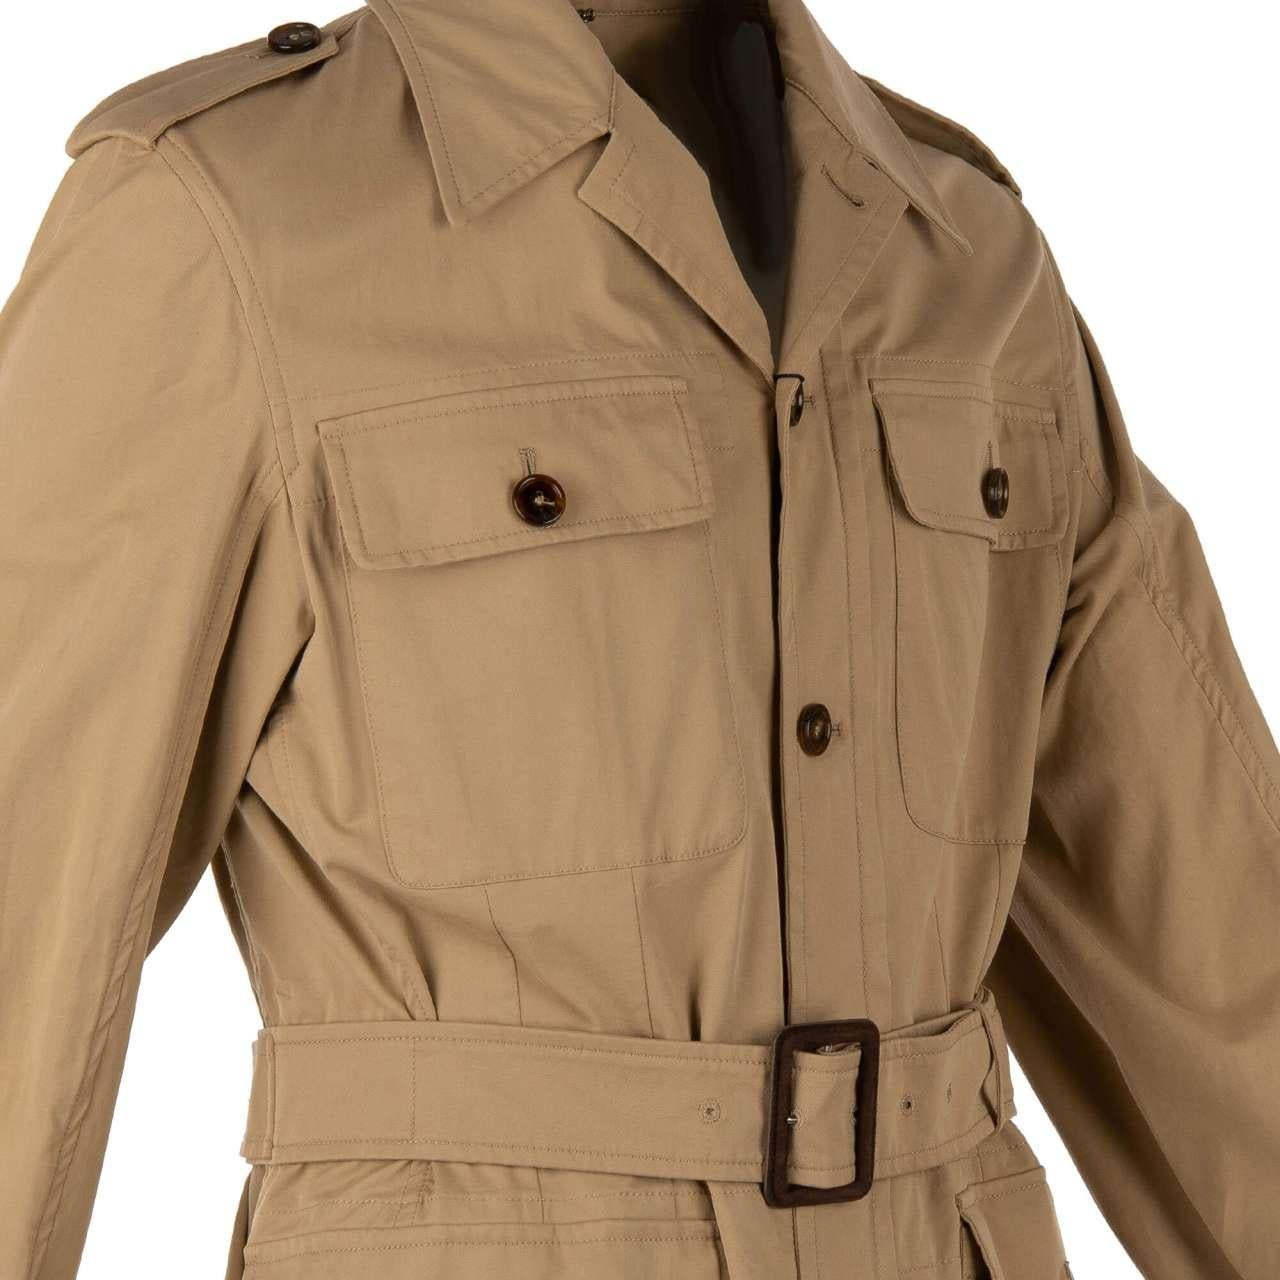 Dolce & Gabbana Canvas Safari Jacket SNEAK PEEK with Belt and Pockets Beige 46 For Sale 1